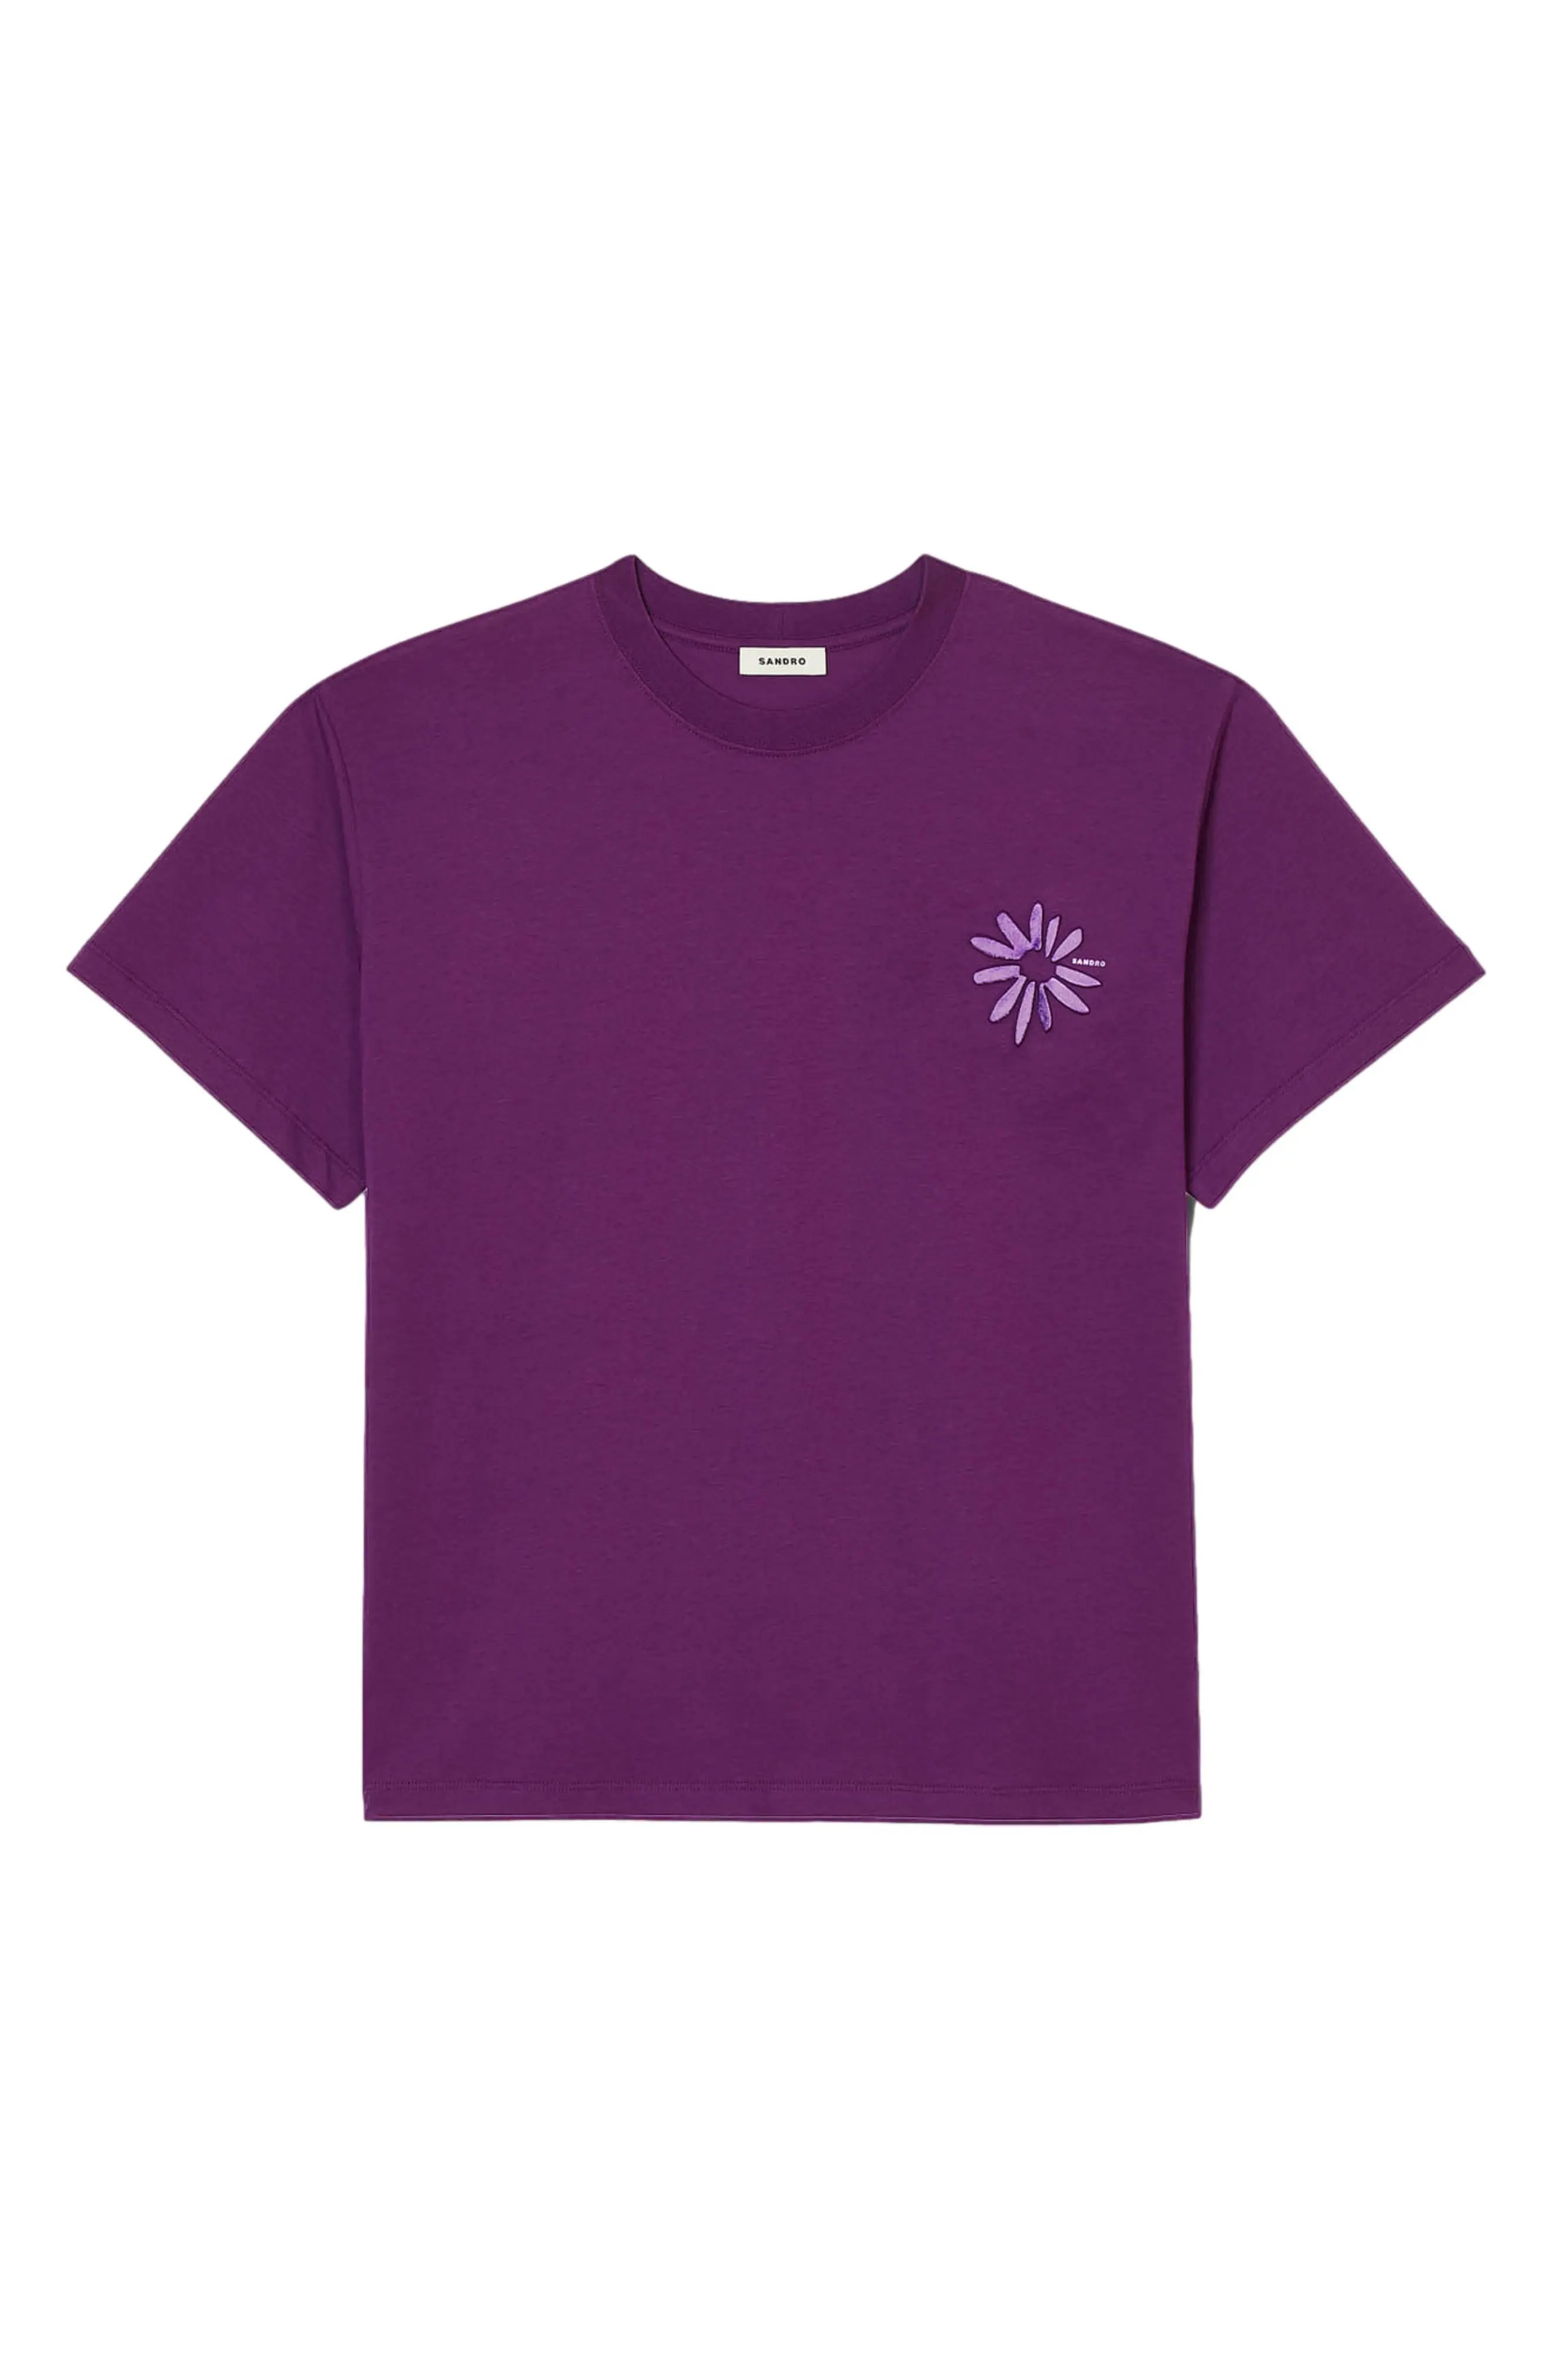 Glossy Flower Graphic T-Shirt - 4